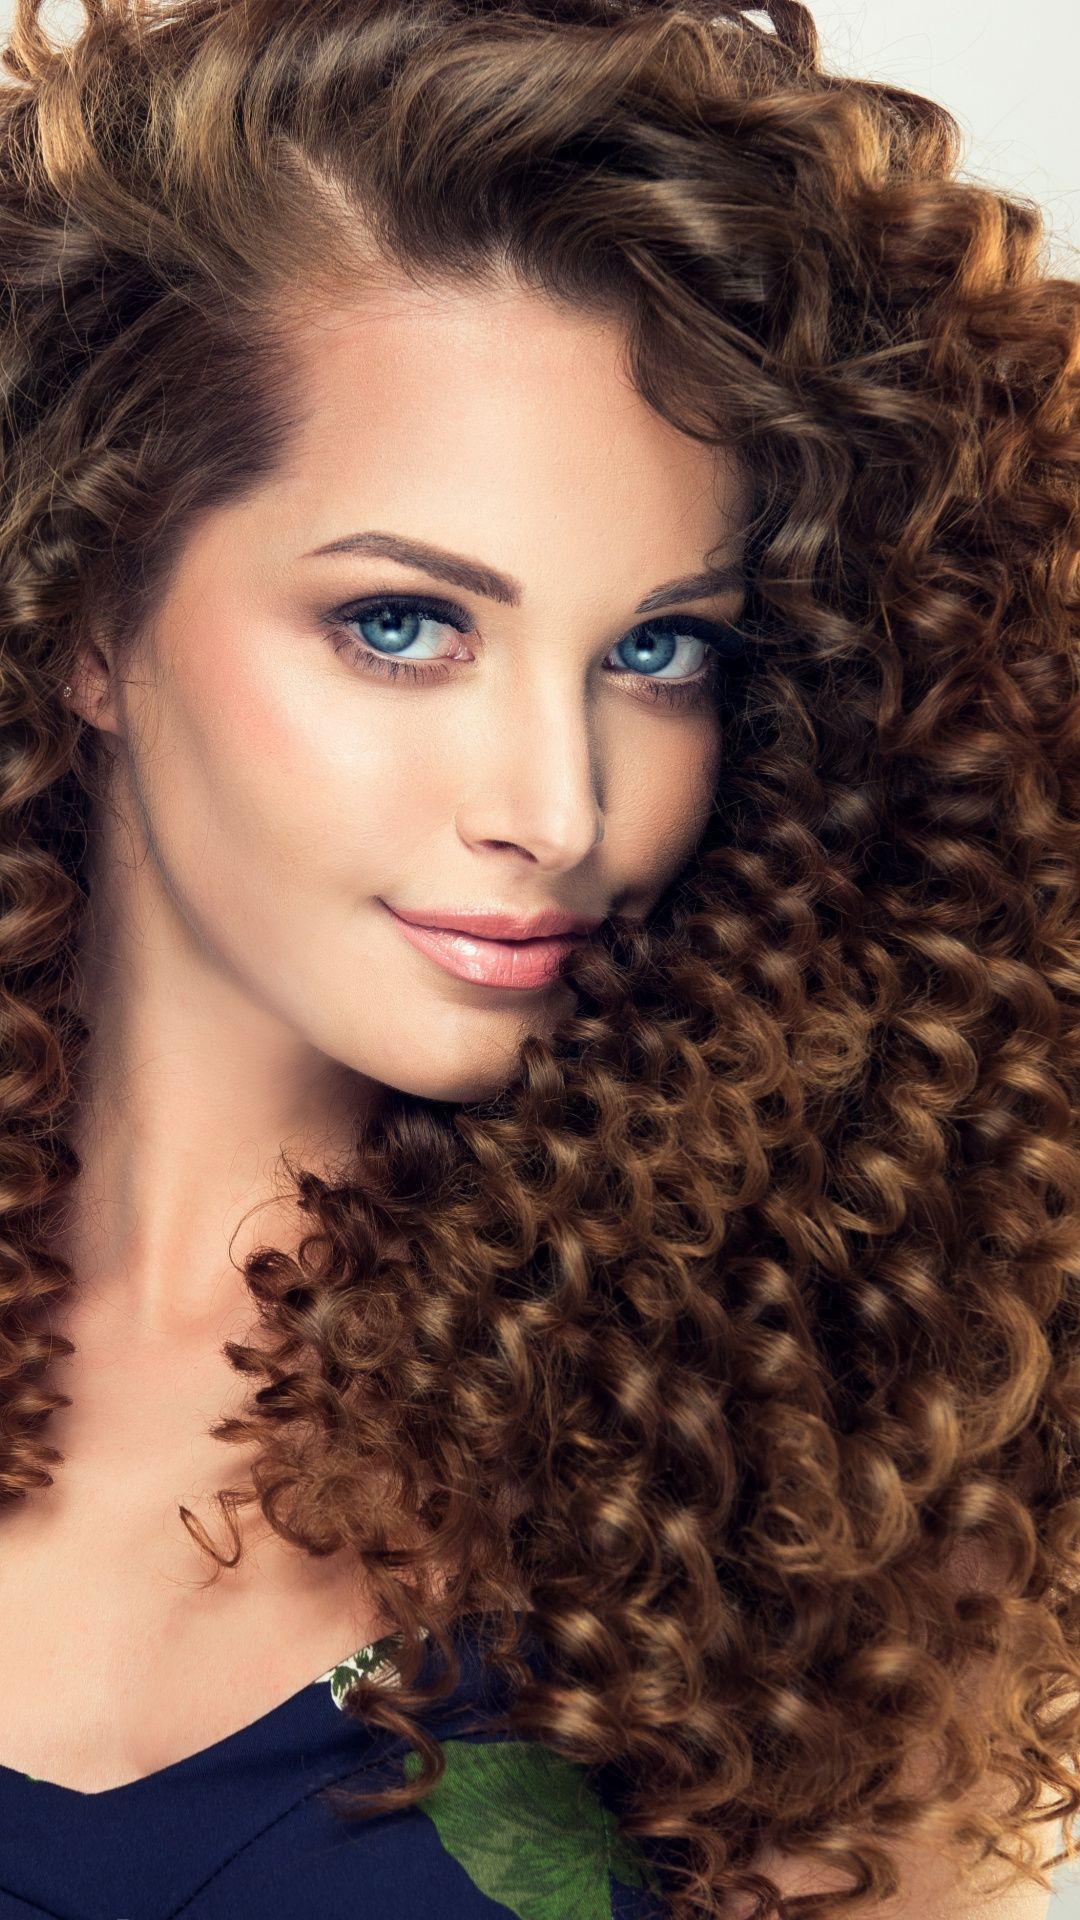 Beautiful Curly Hair Female Beauty Model Stock Photo 530196364   Shutterstock